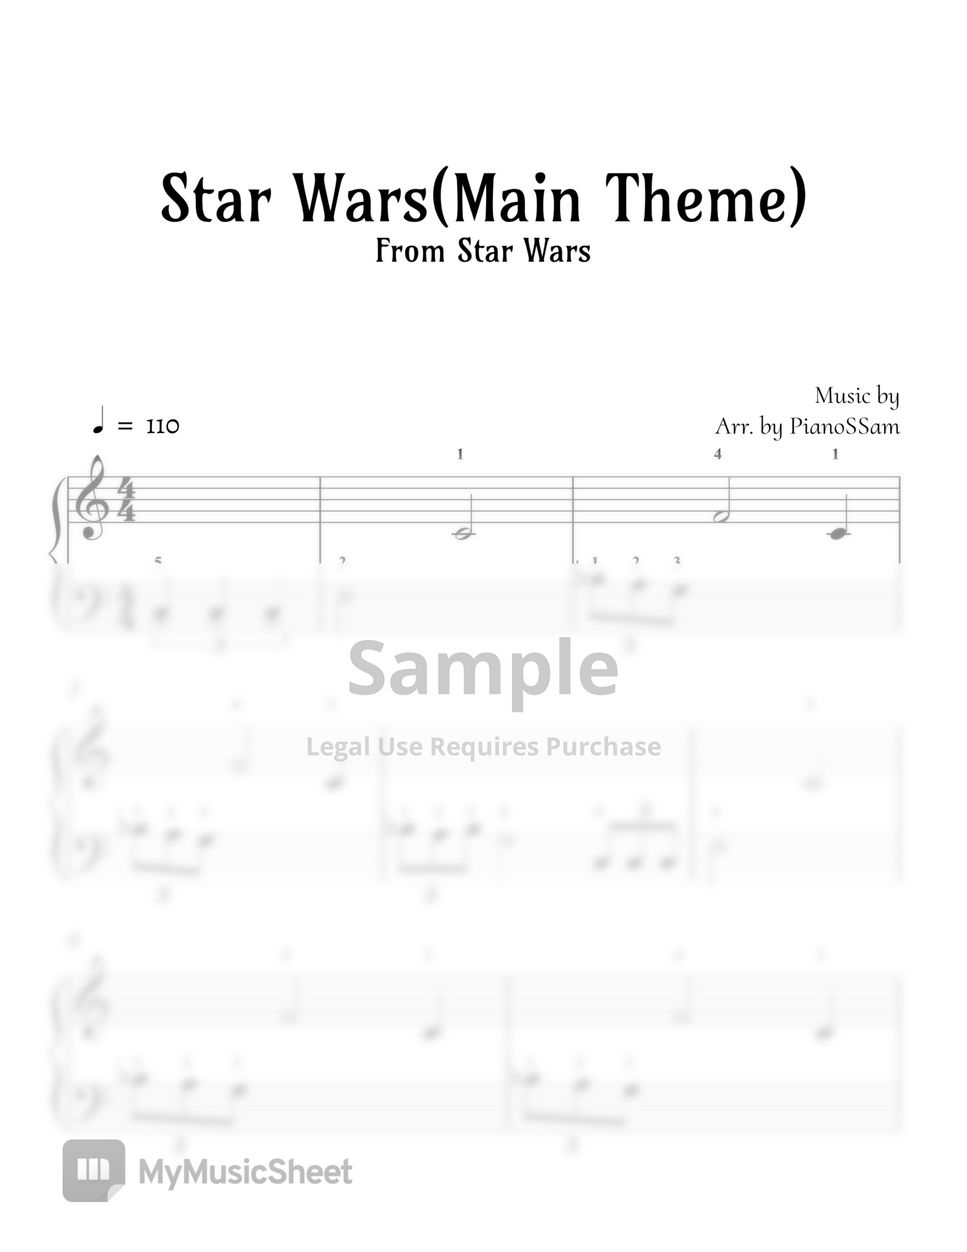 John Williams - [Beginner] Star Wars Main Theme (Star Wars) by PianoSSam